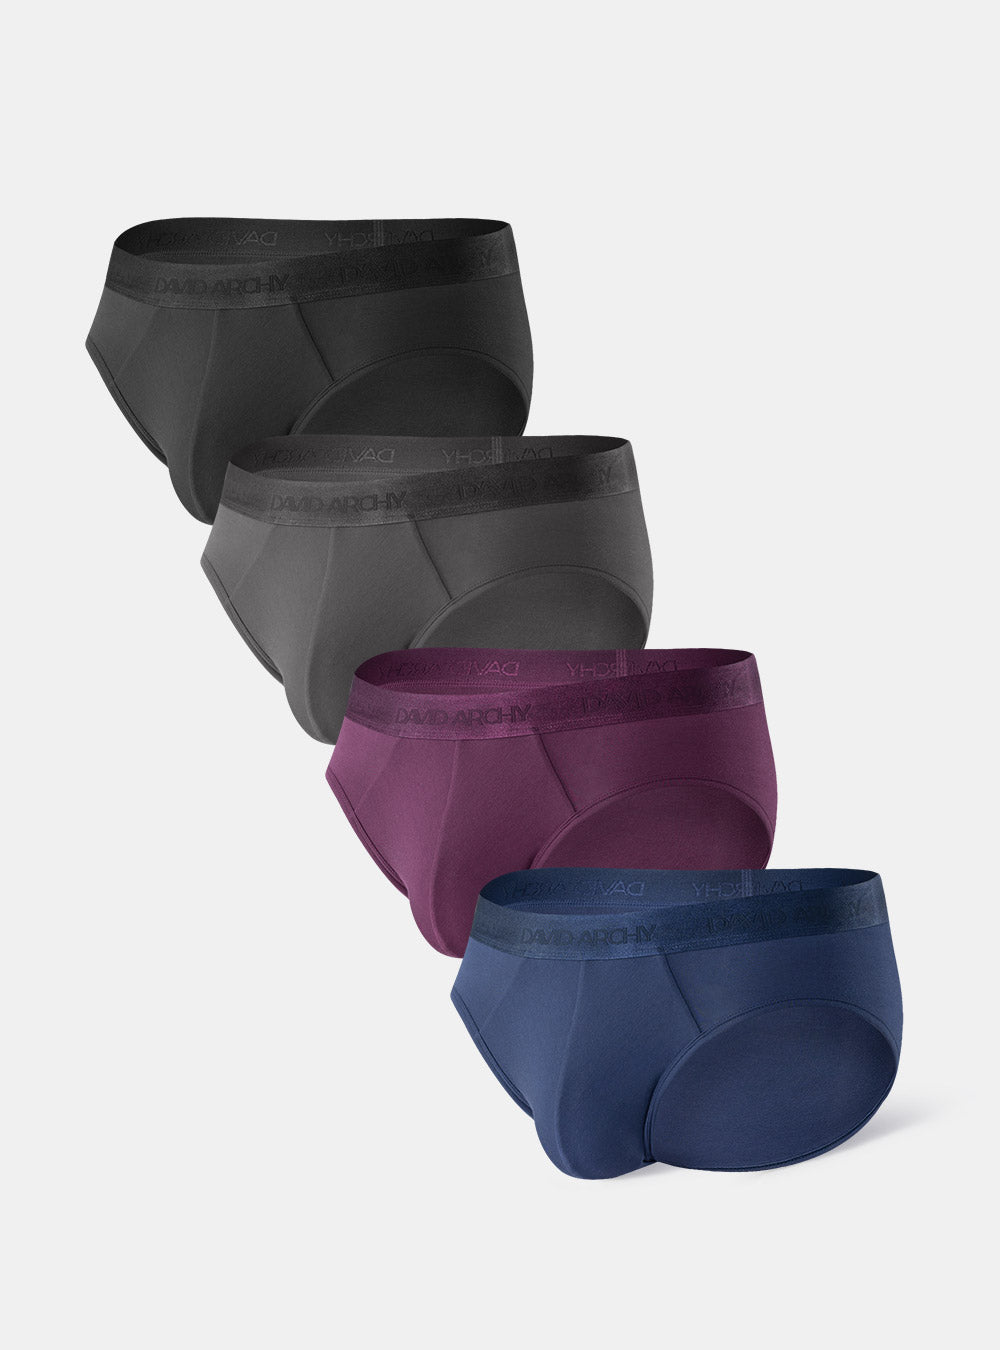 4 Packs Briefs Micro Modal Super Soft David Archy Most Comfortable Men's  Underwear